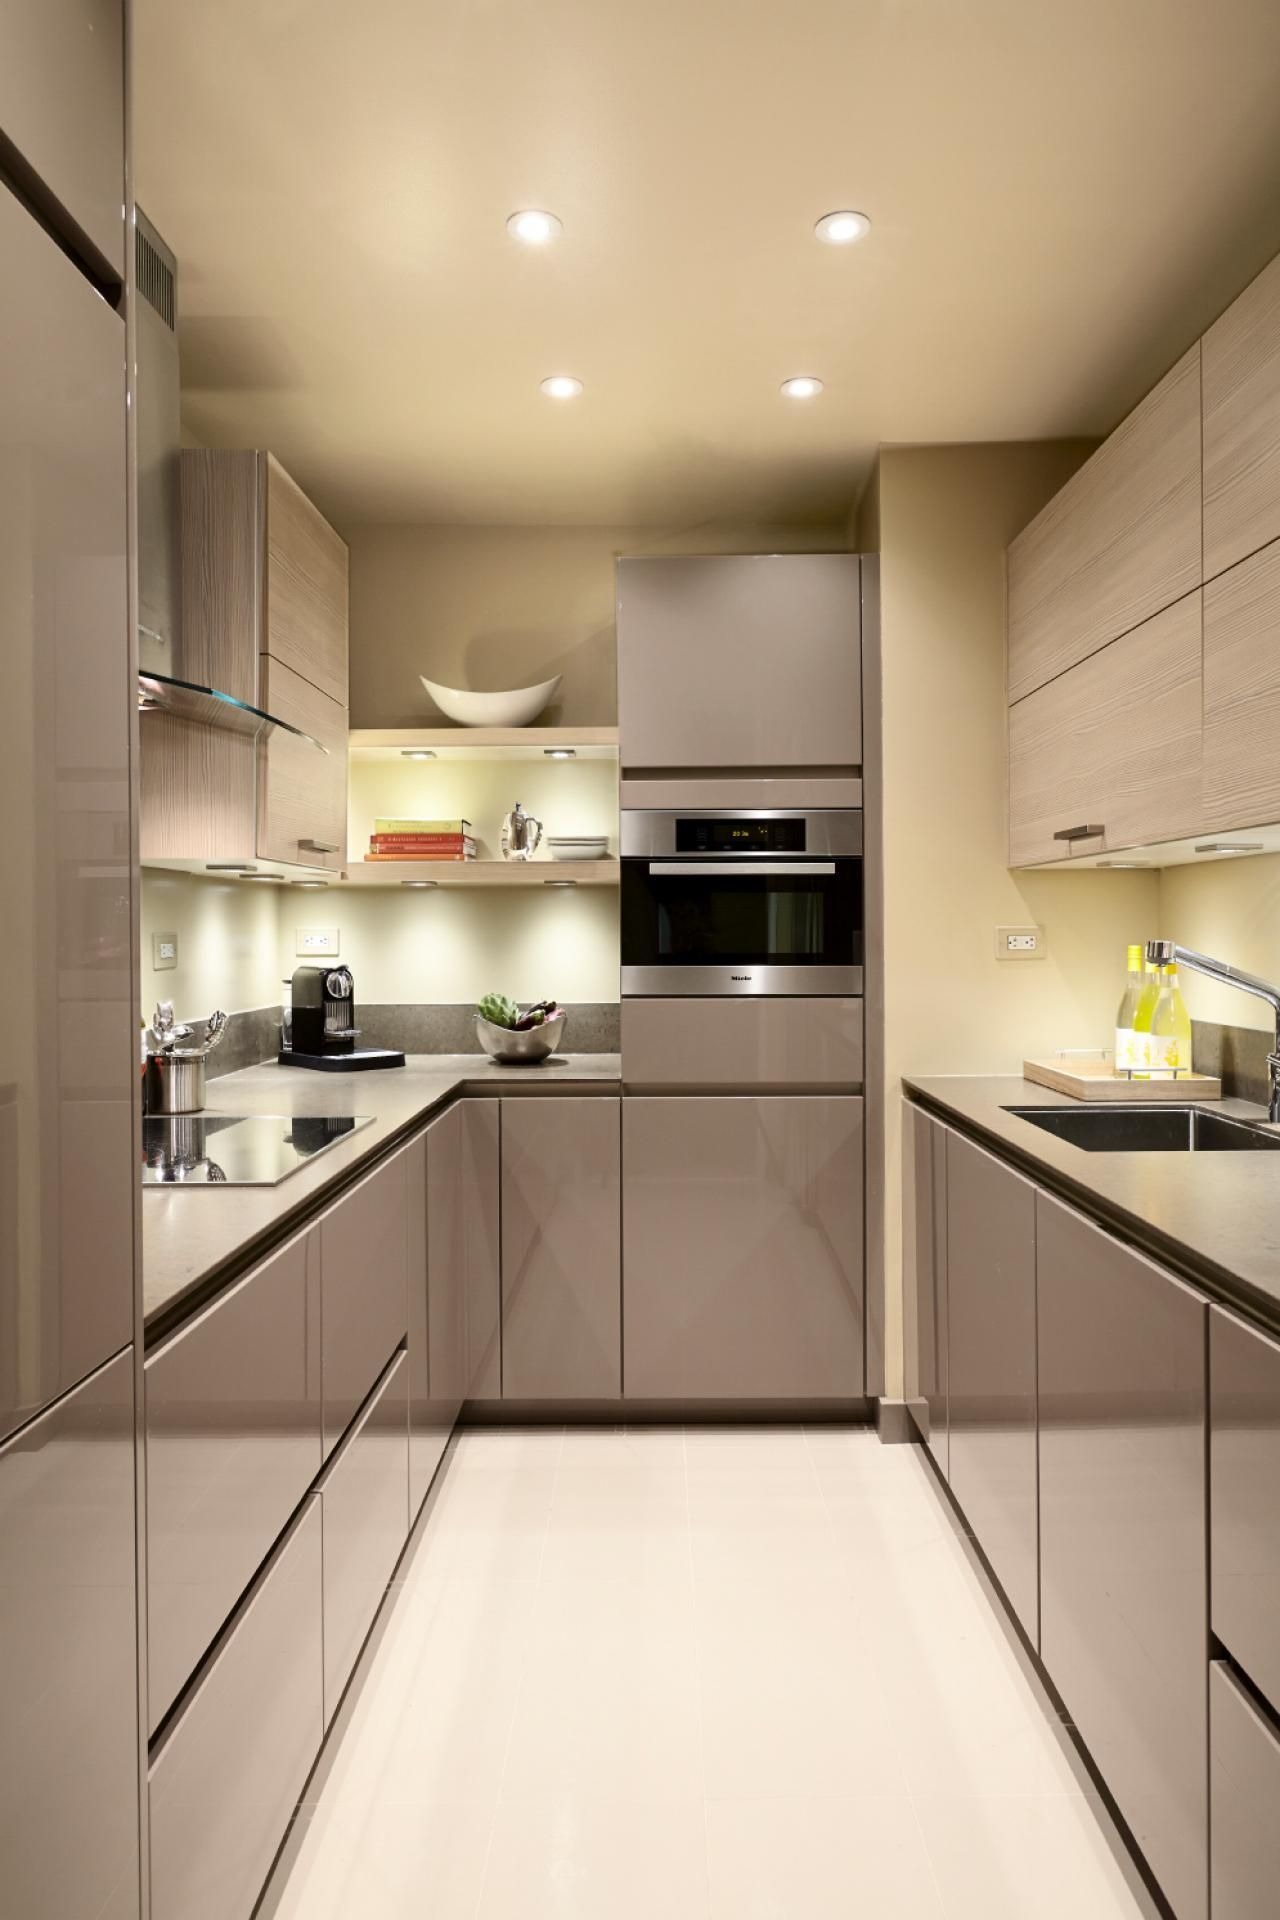 Use Shiny Cabinets for U-Shaped Kitchen